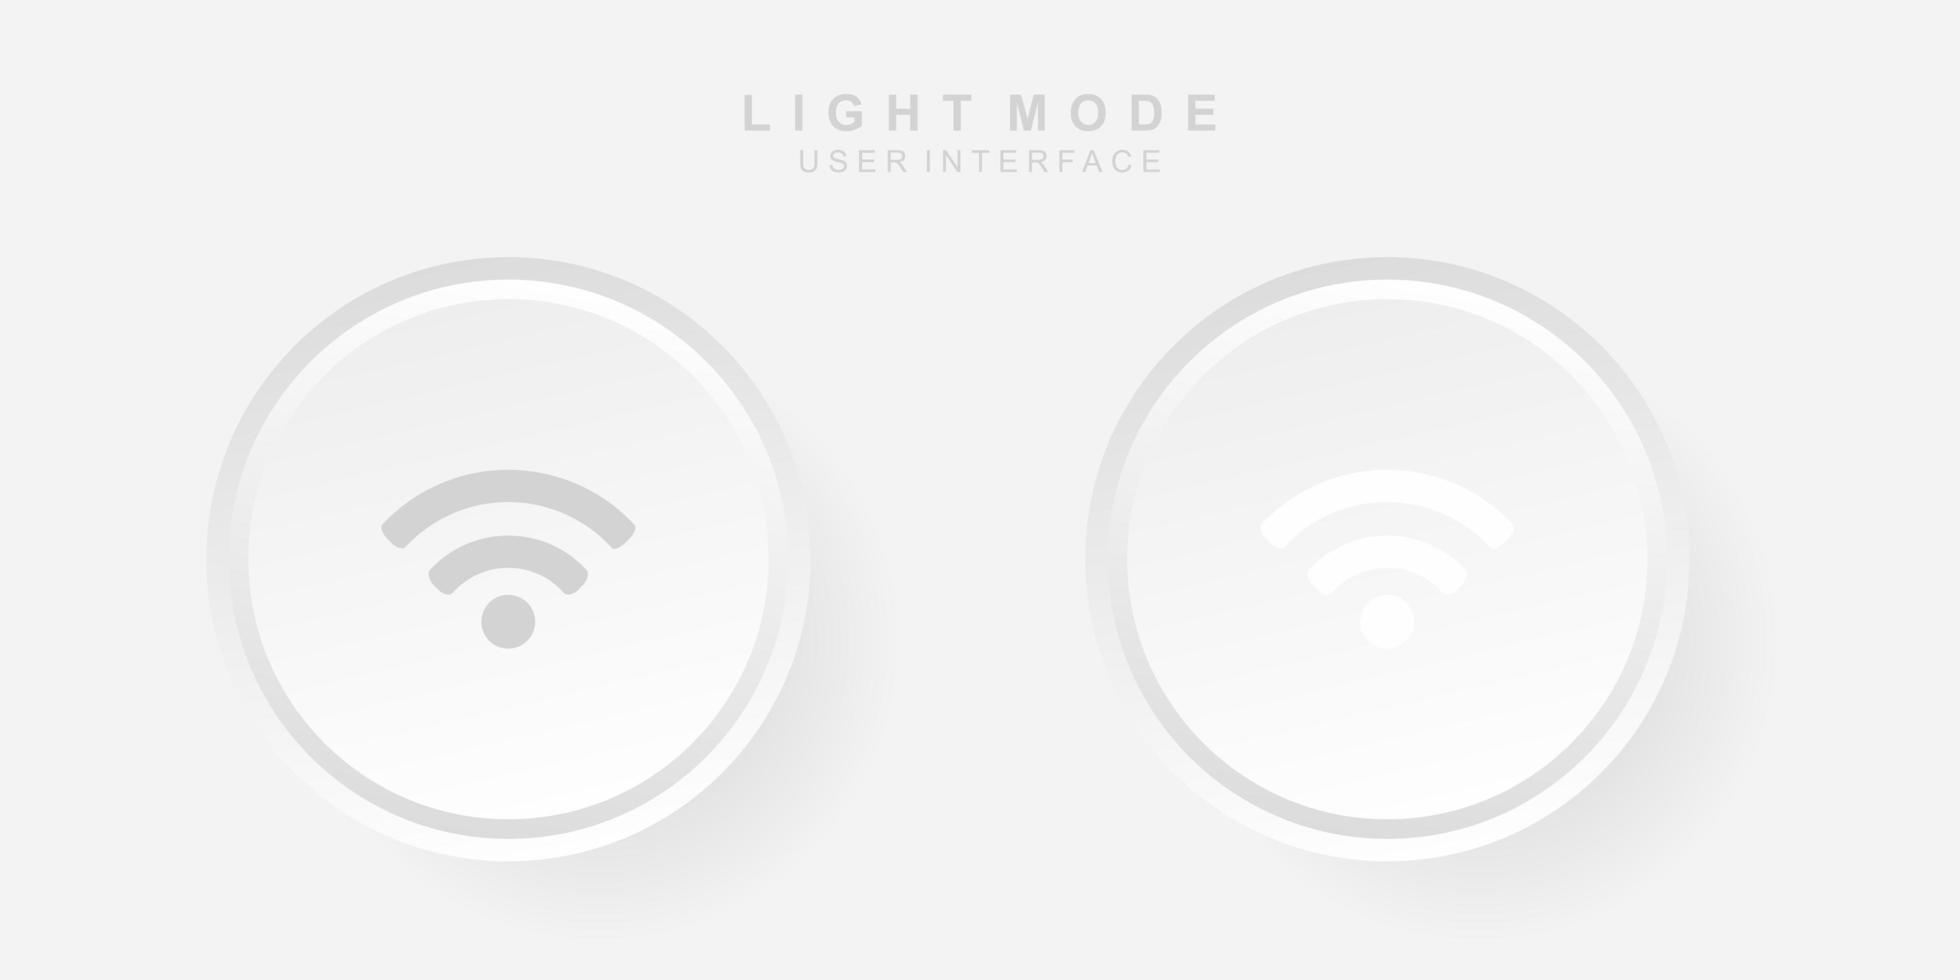 Simple Creative Wifi User Interface in Light Neumorphism Design vector